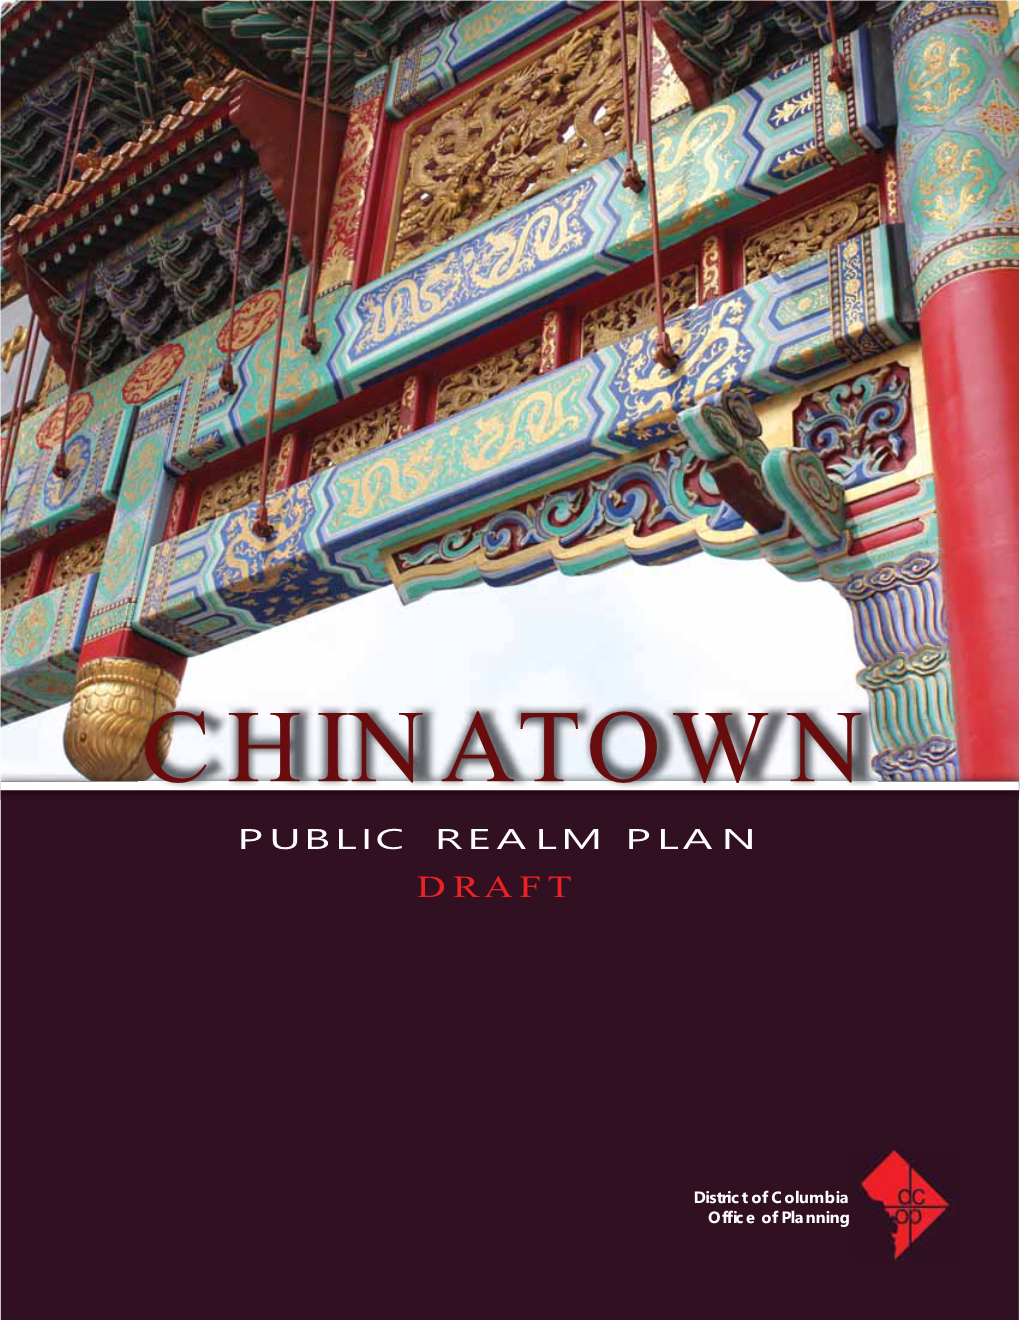 Chinatown Public Realm Plan Draft